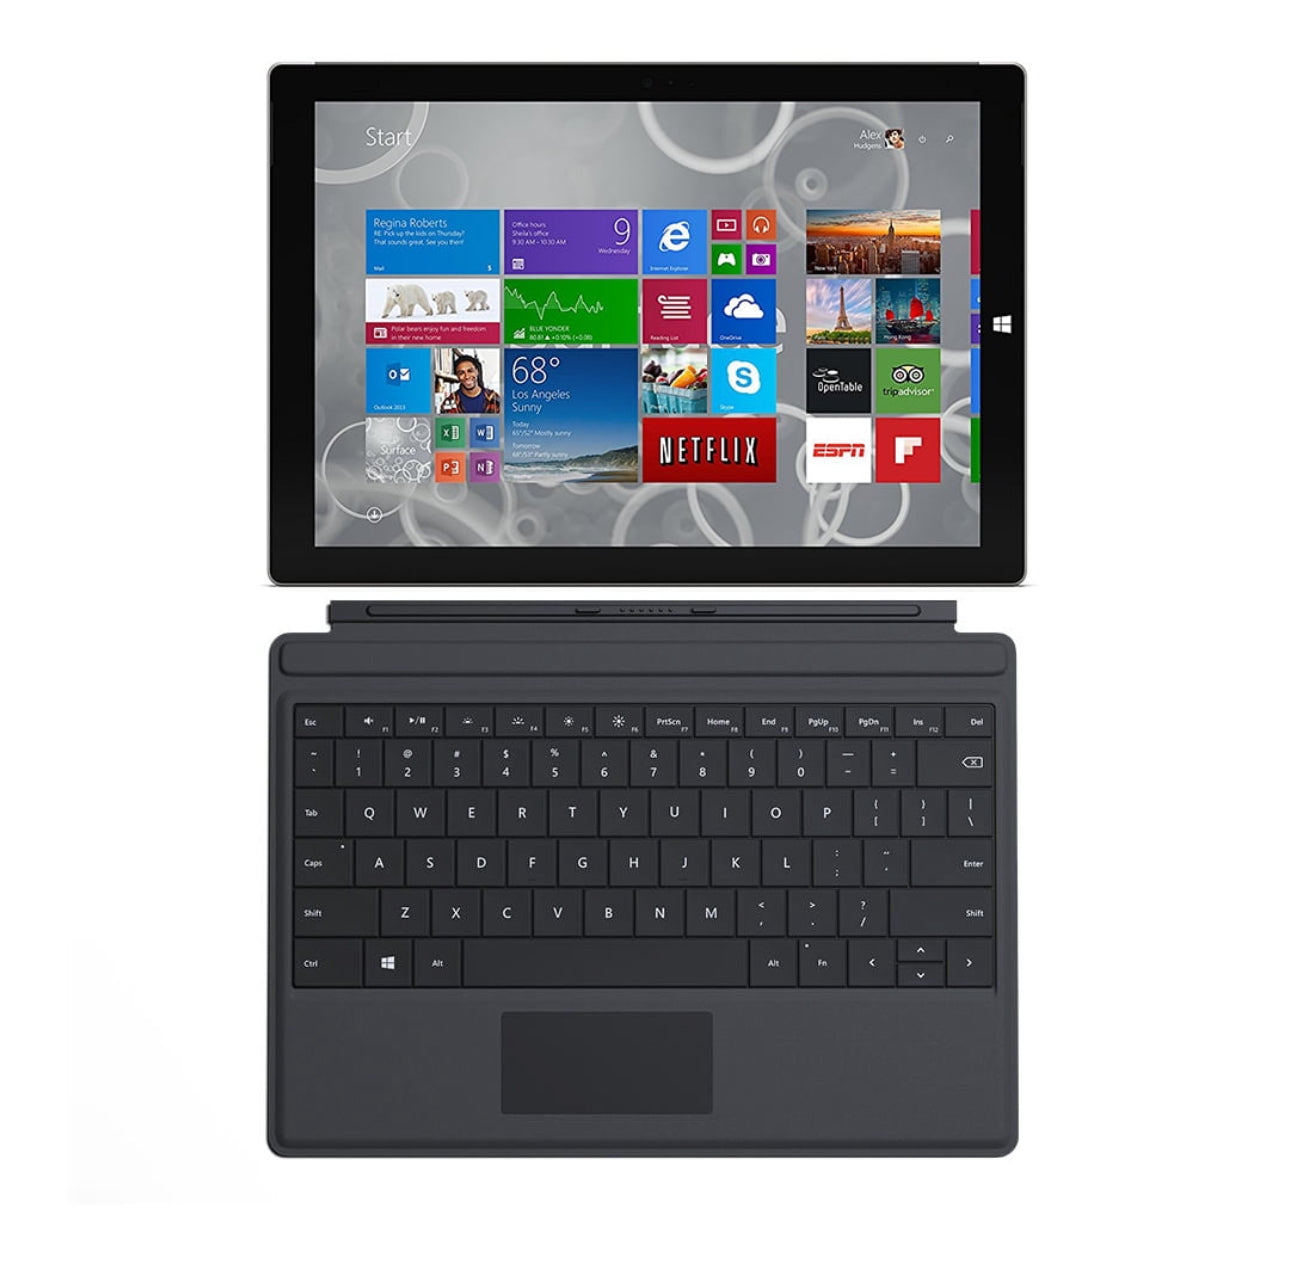 Microsoft Surface Pro 3 12.3 inch (Intel Core i5 4300U, 8GB RAM, 256GB SSD) With Keyboard